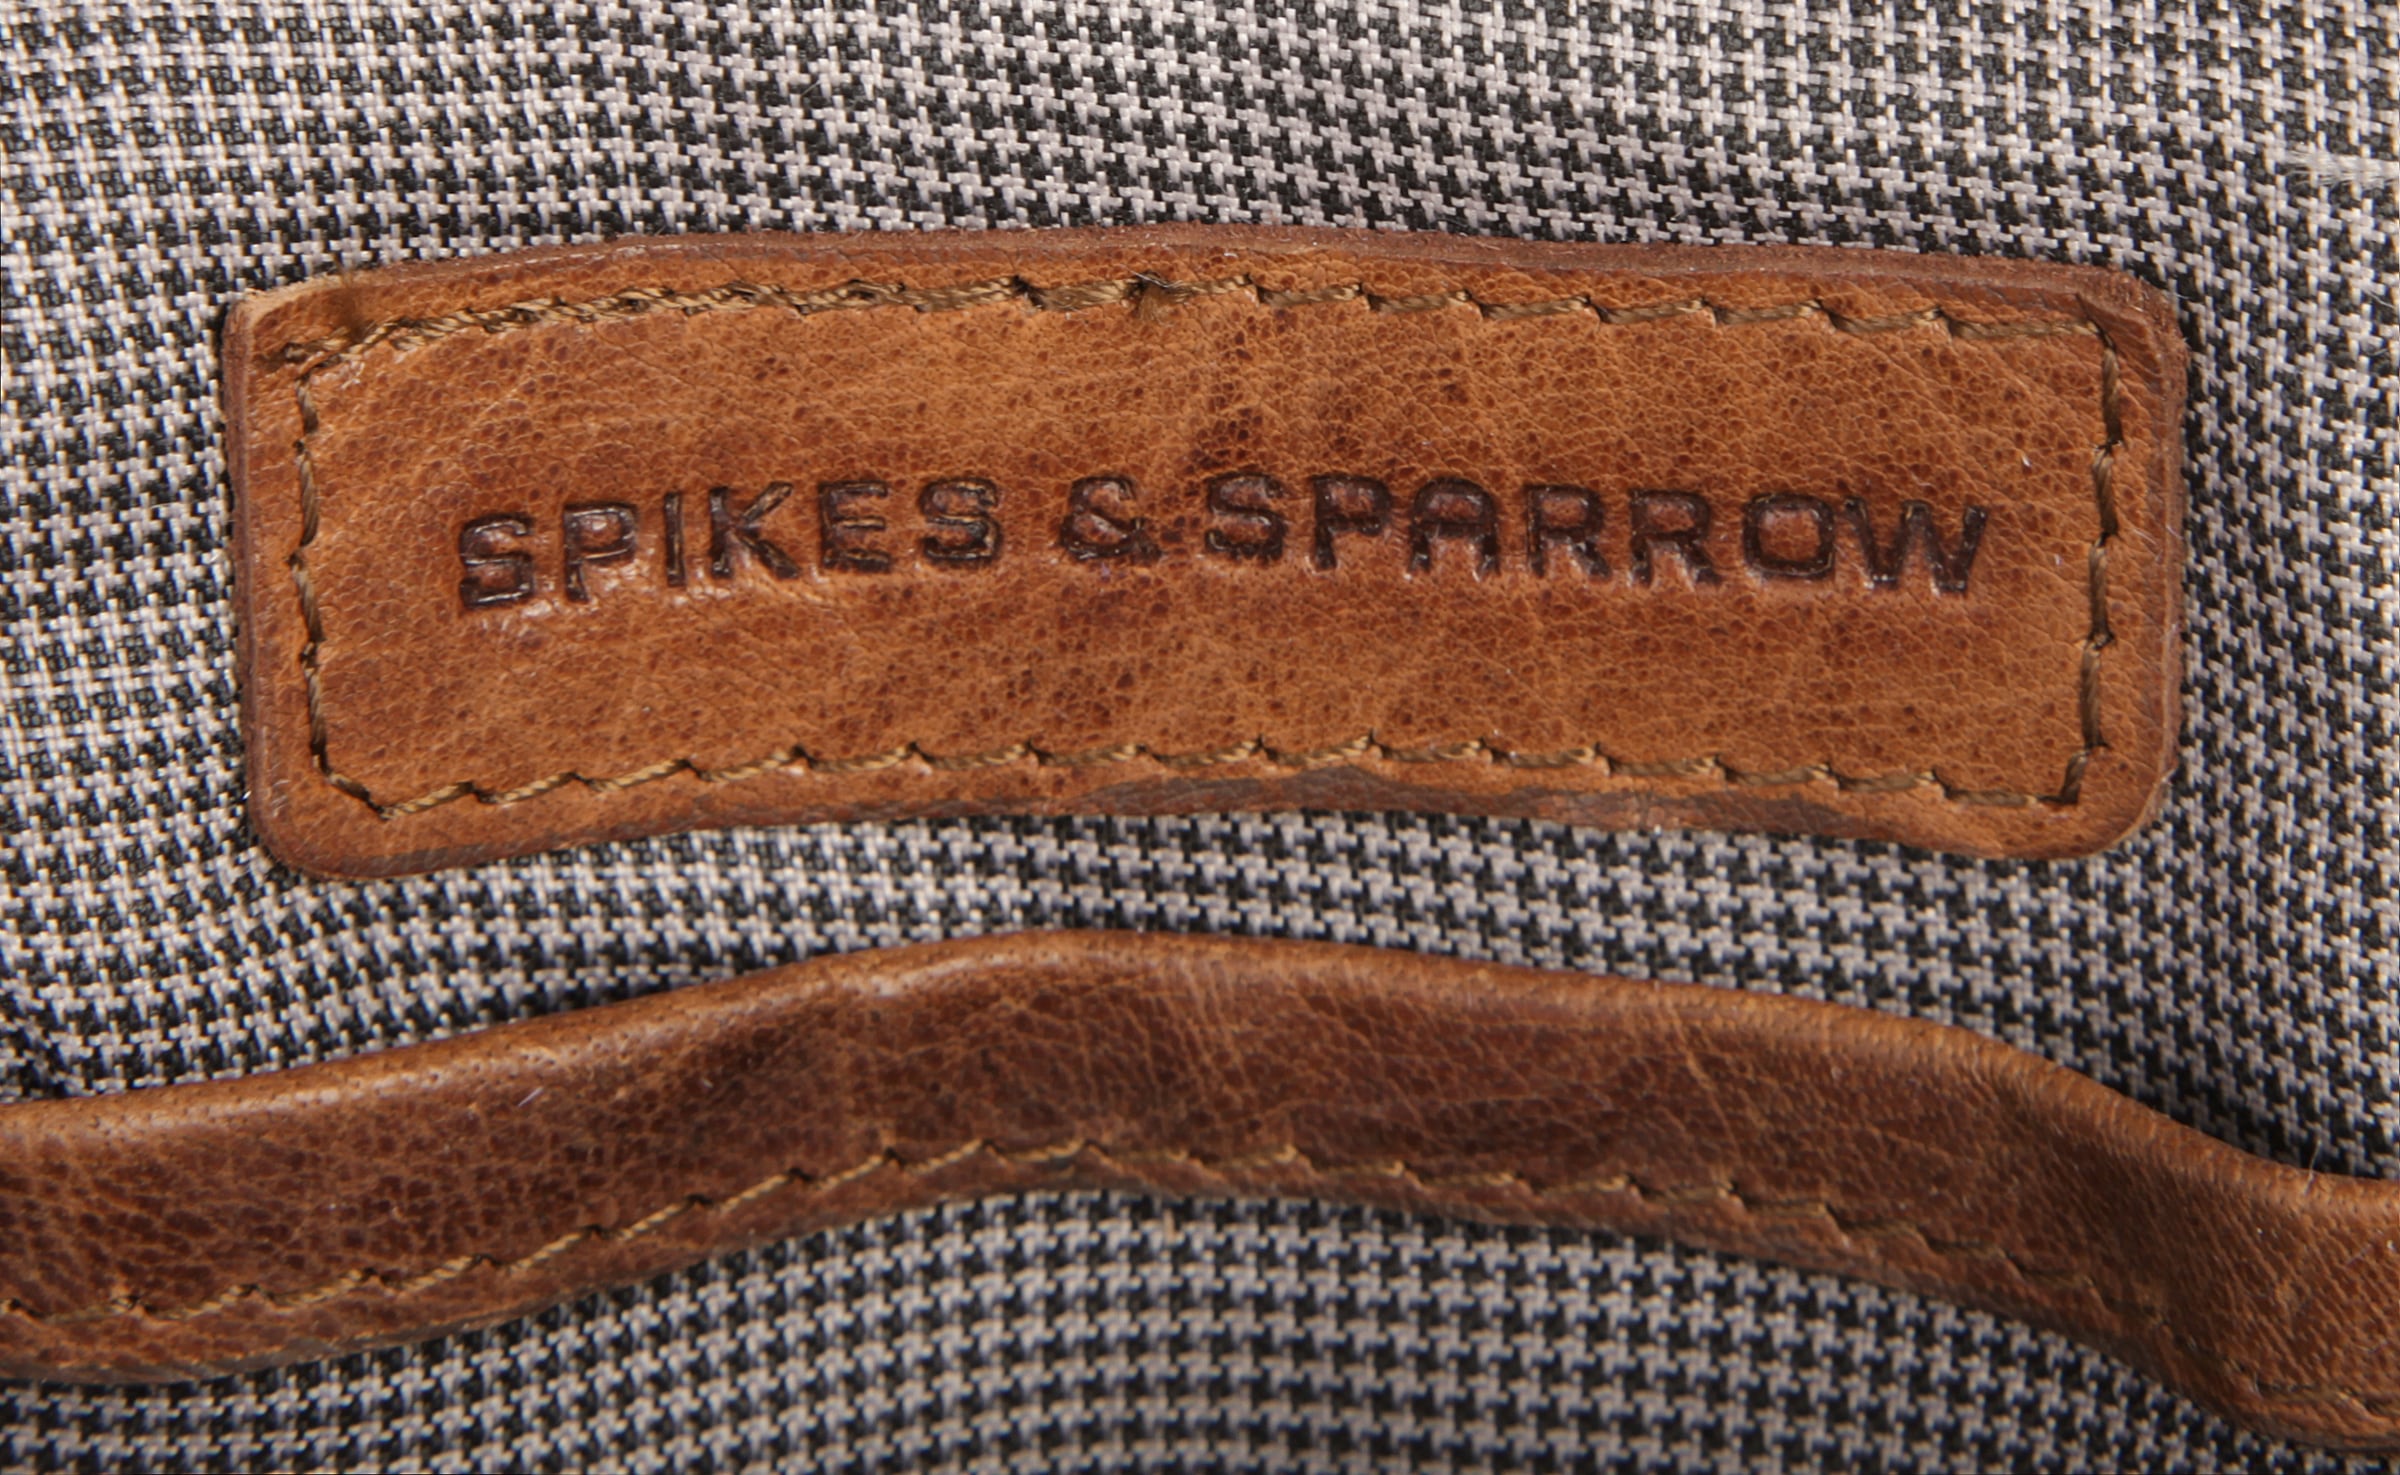 Spikes & Sparrow Umhängetasche, echt Leder